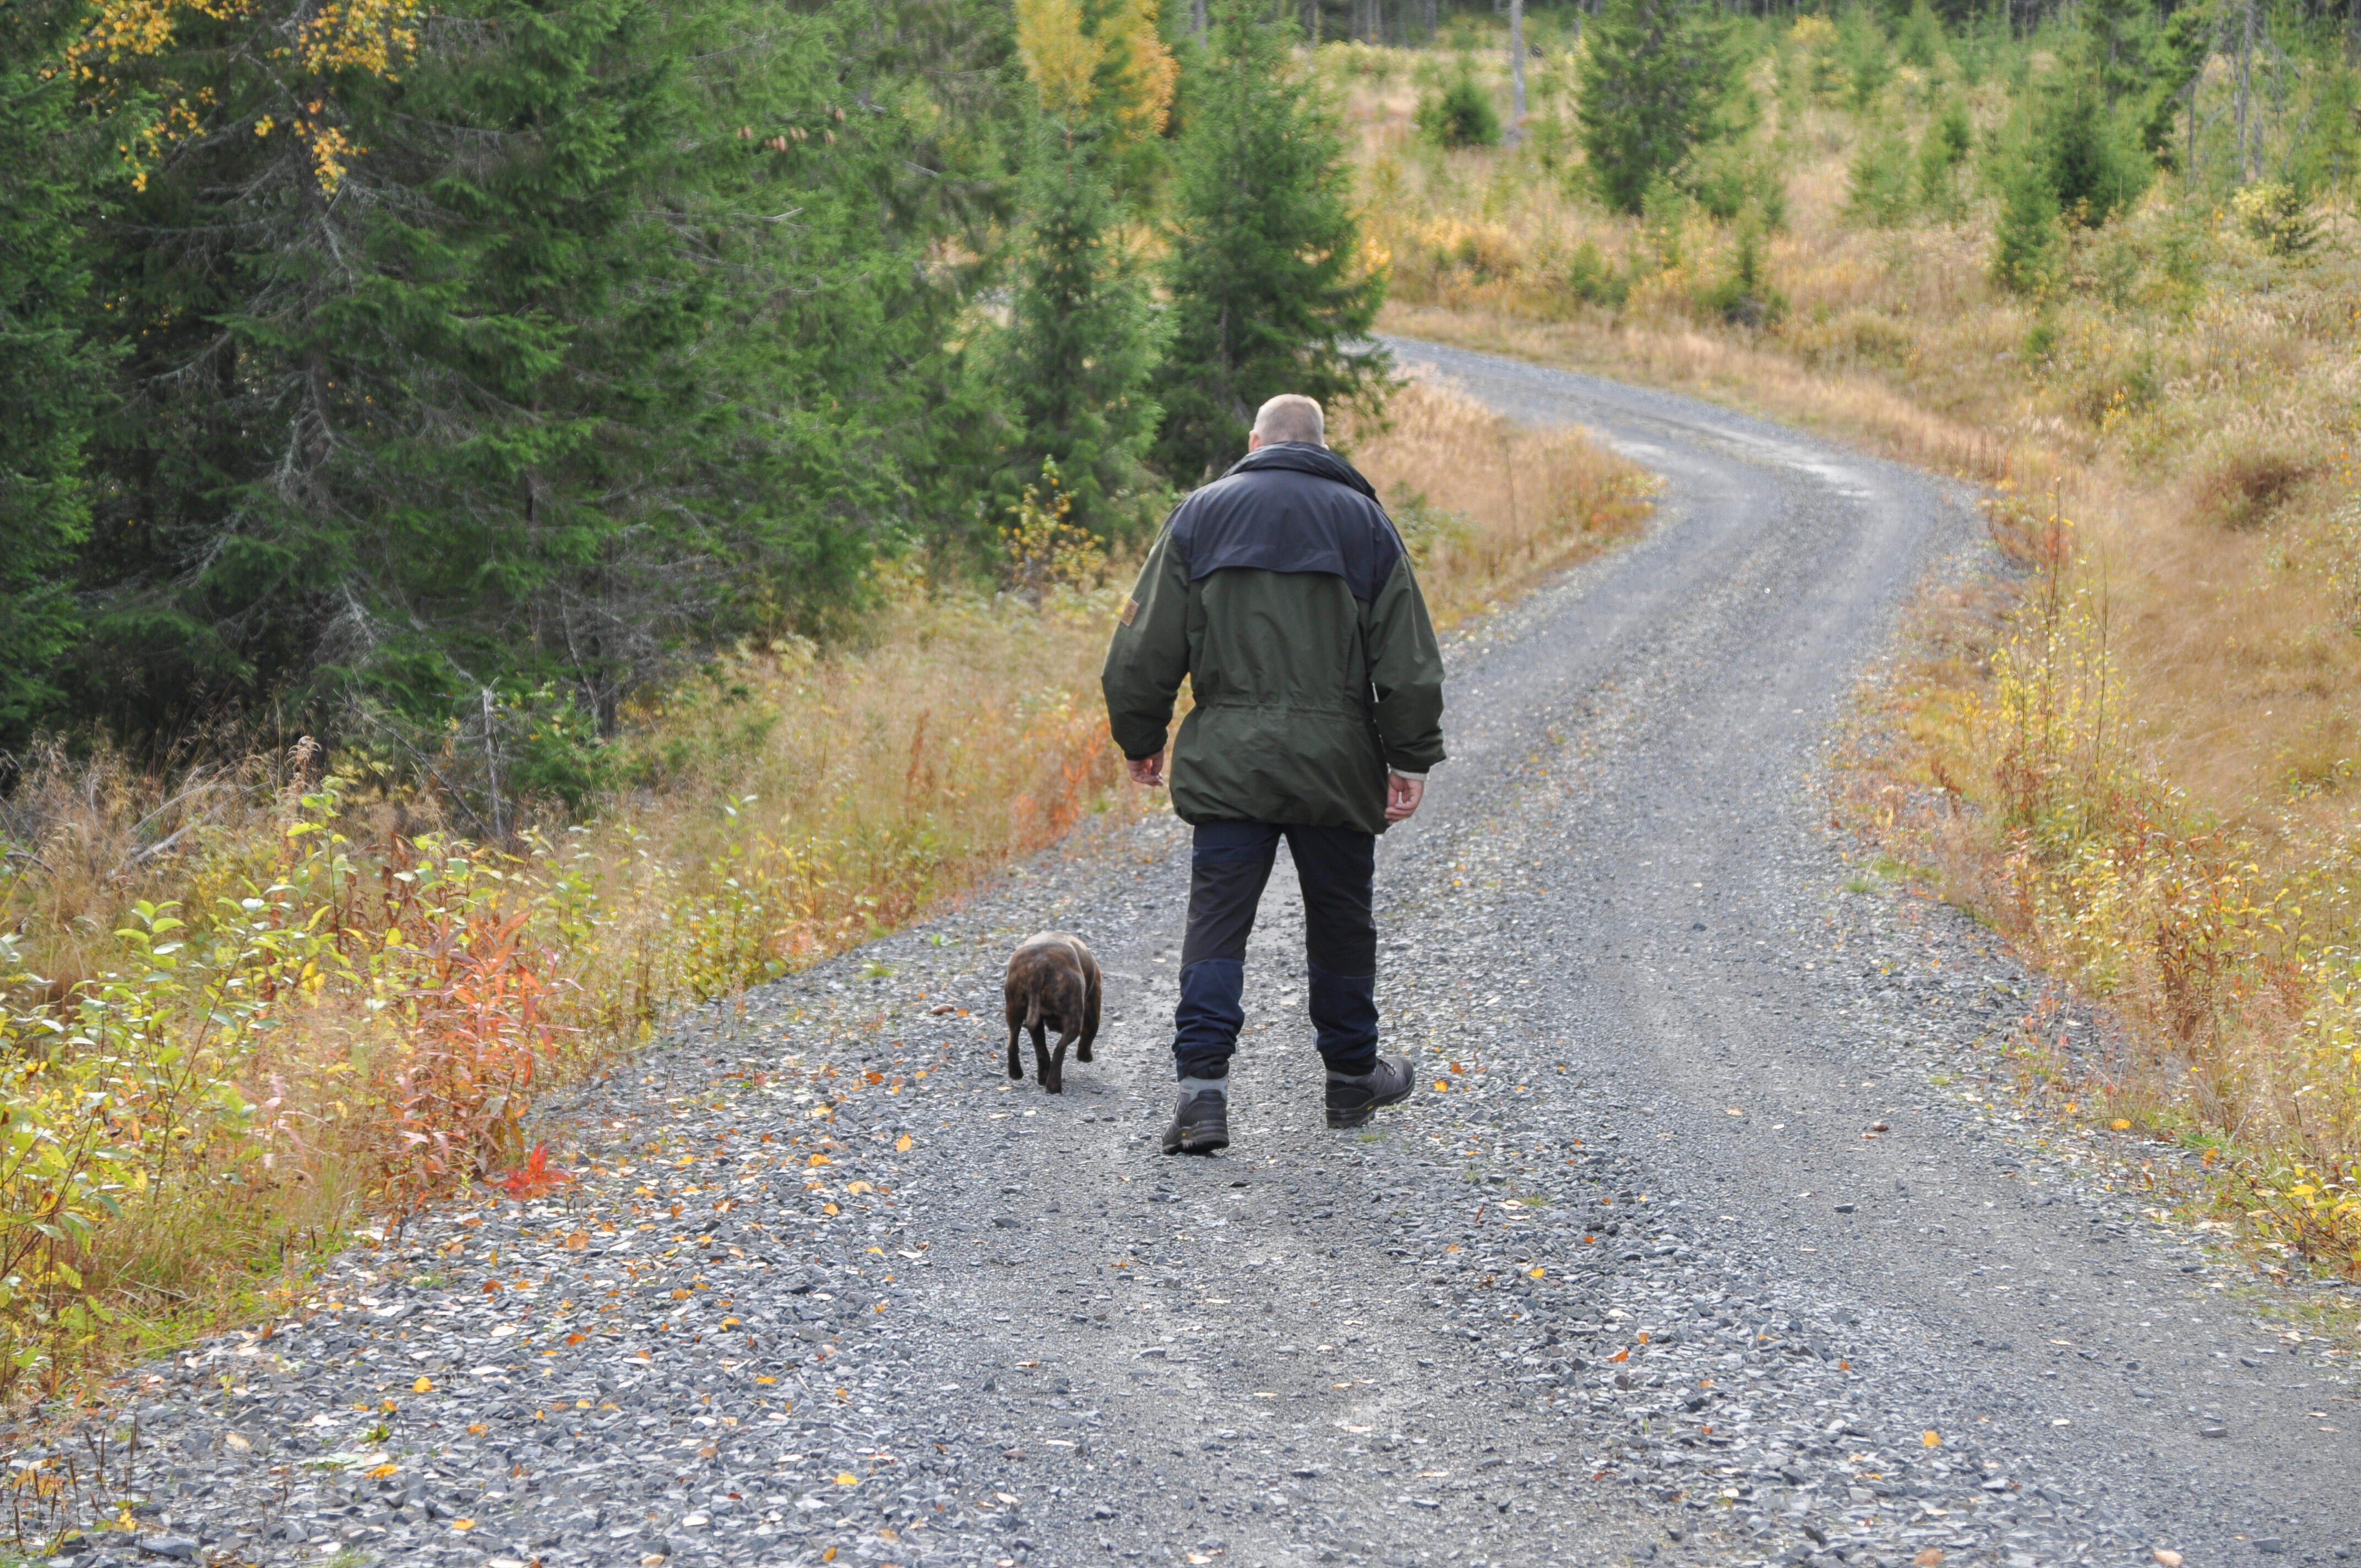 Mann som går tur med hund på en grusvei i høstlandskap.